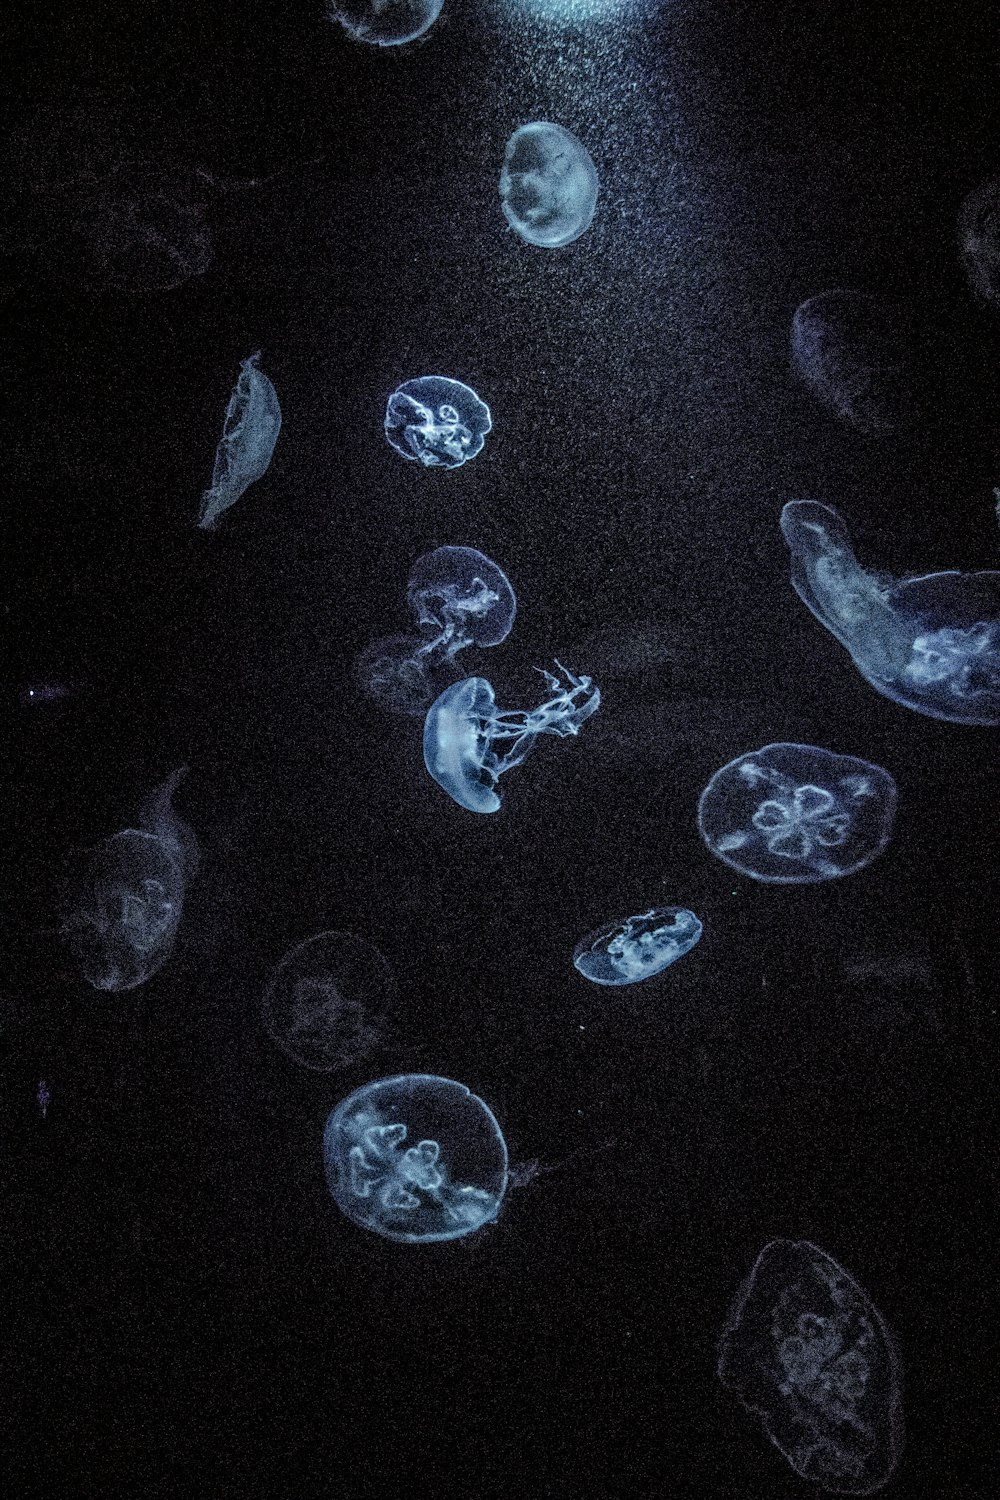 fotografia subacquea di meduse